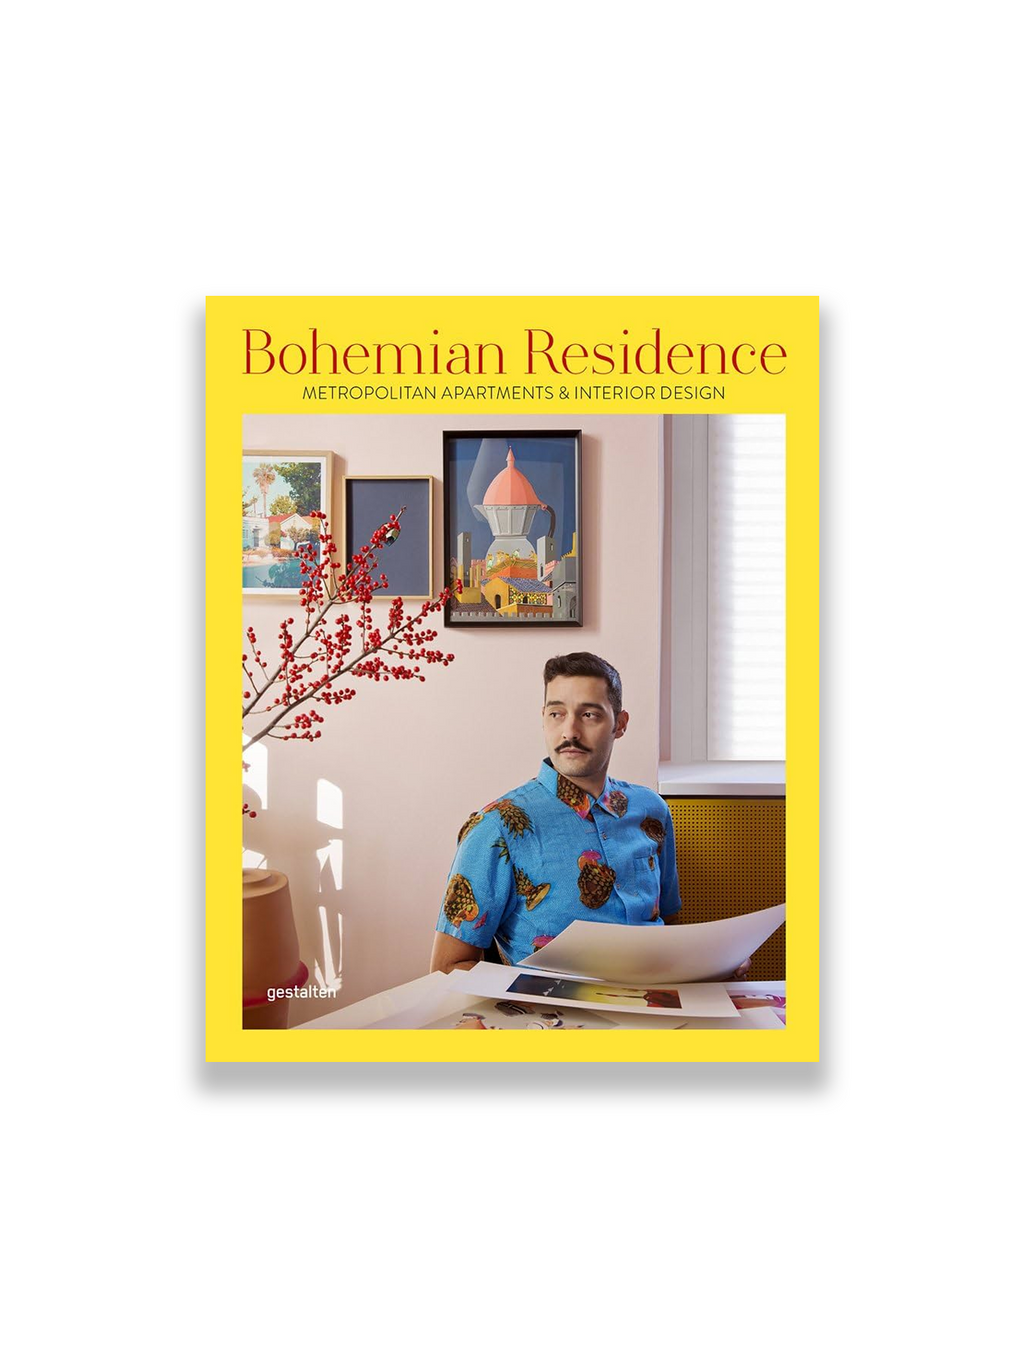 Bohemian Residence. Metropolitan Apartments and Interior Design